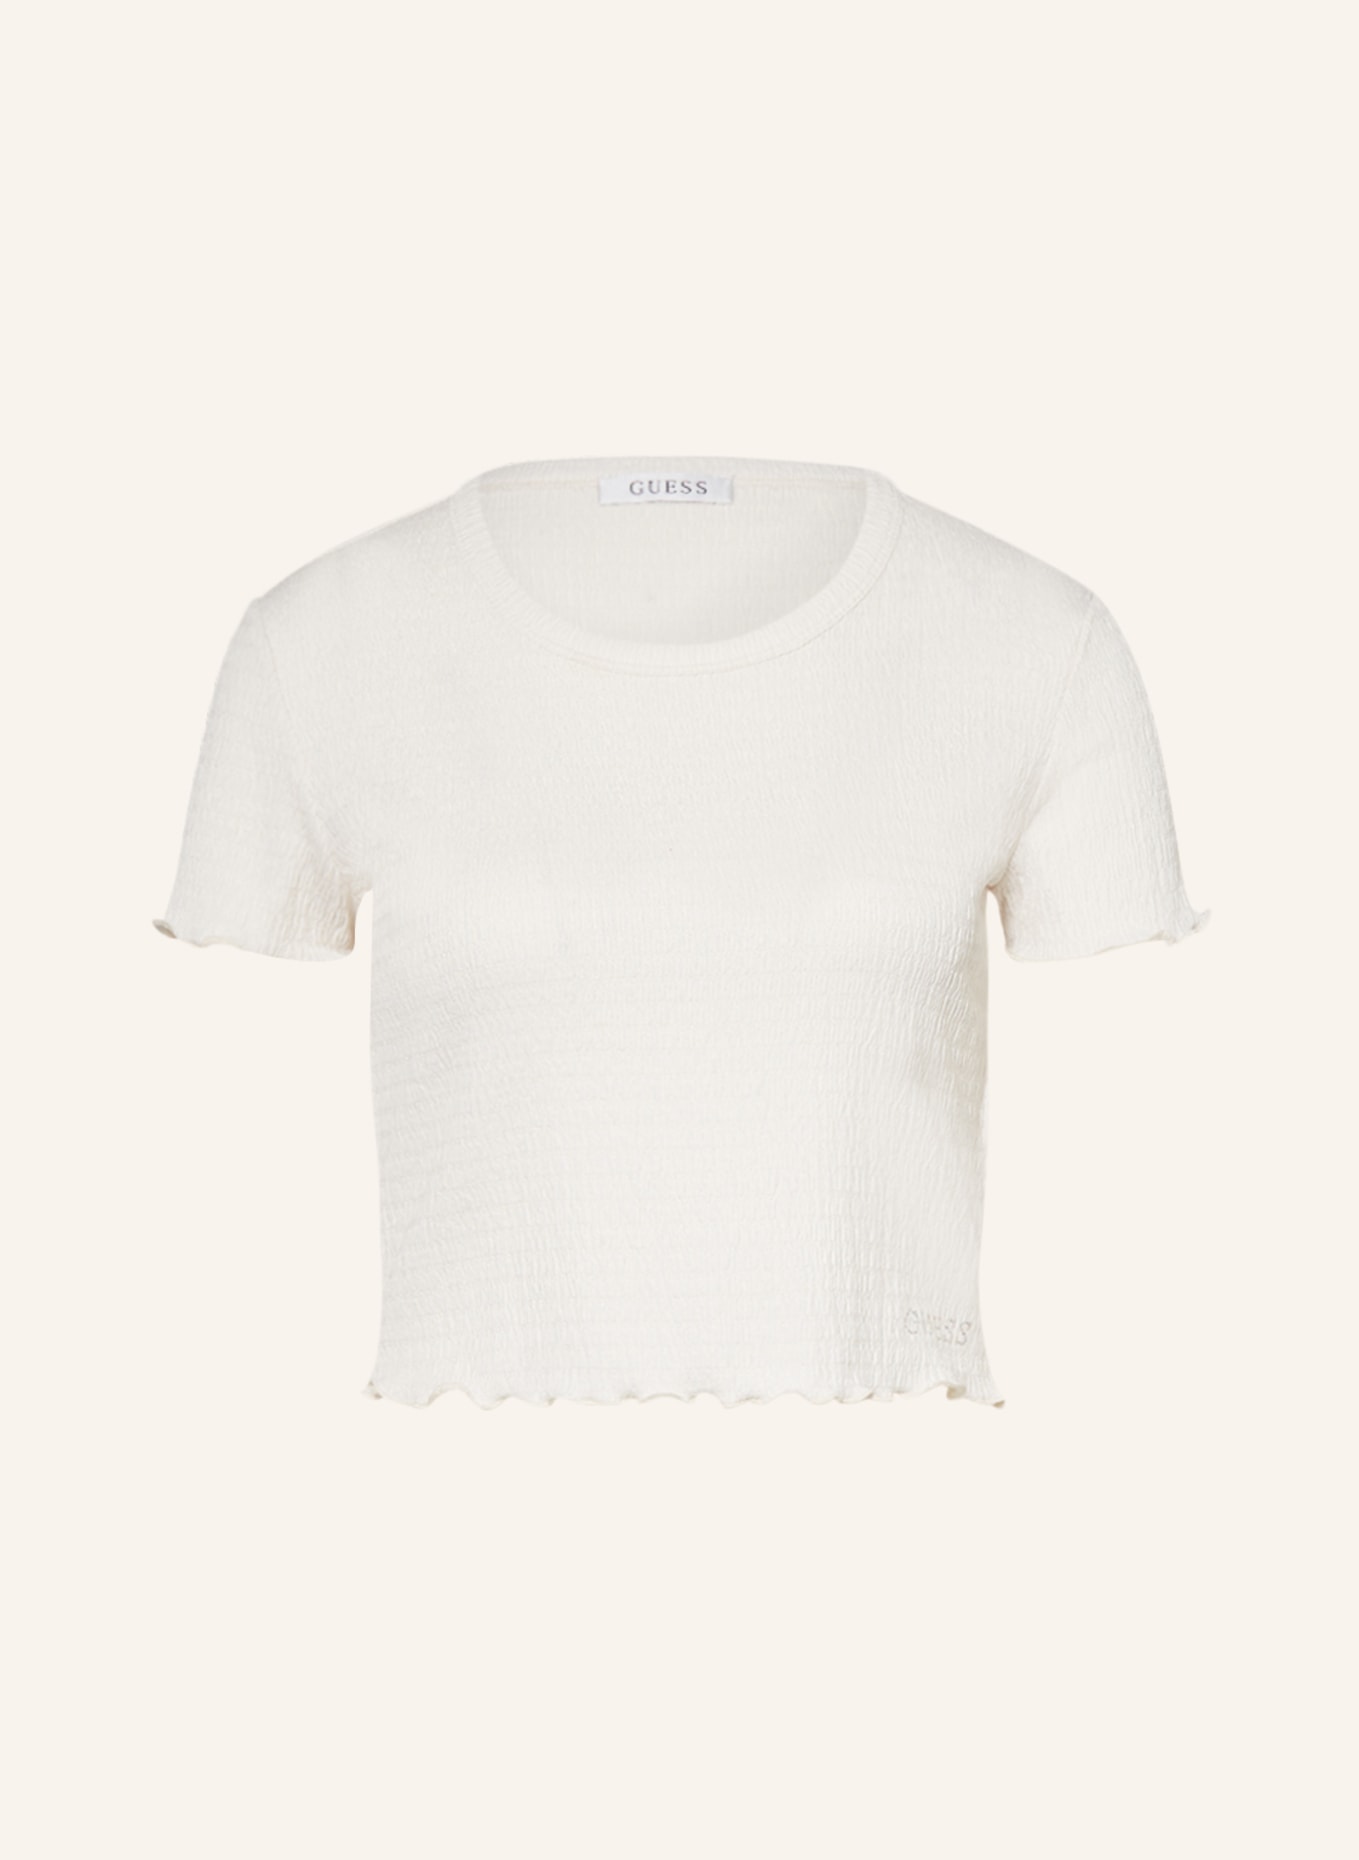 GUESS Cropped-Shirt, Farbe: CREME (Bild 1)